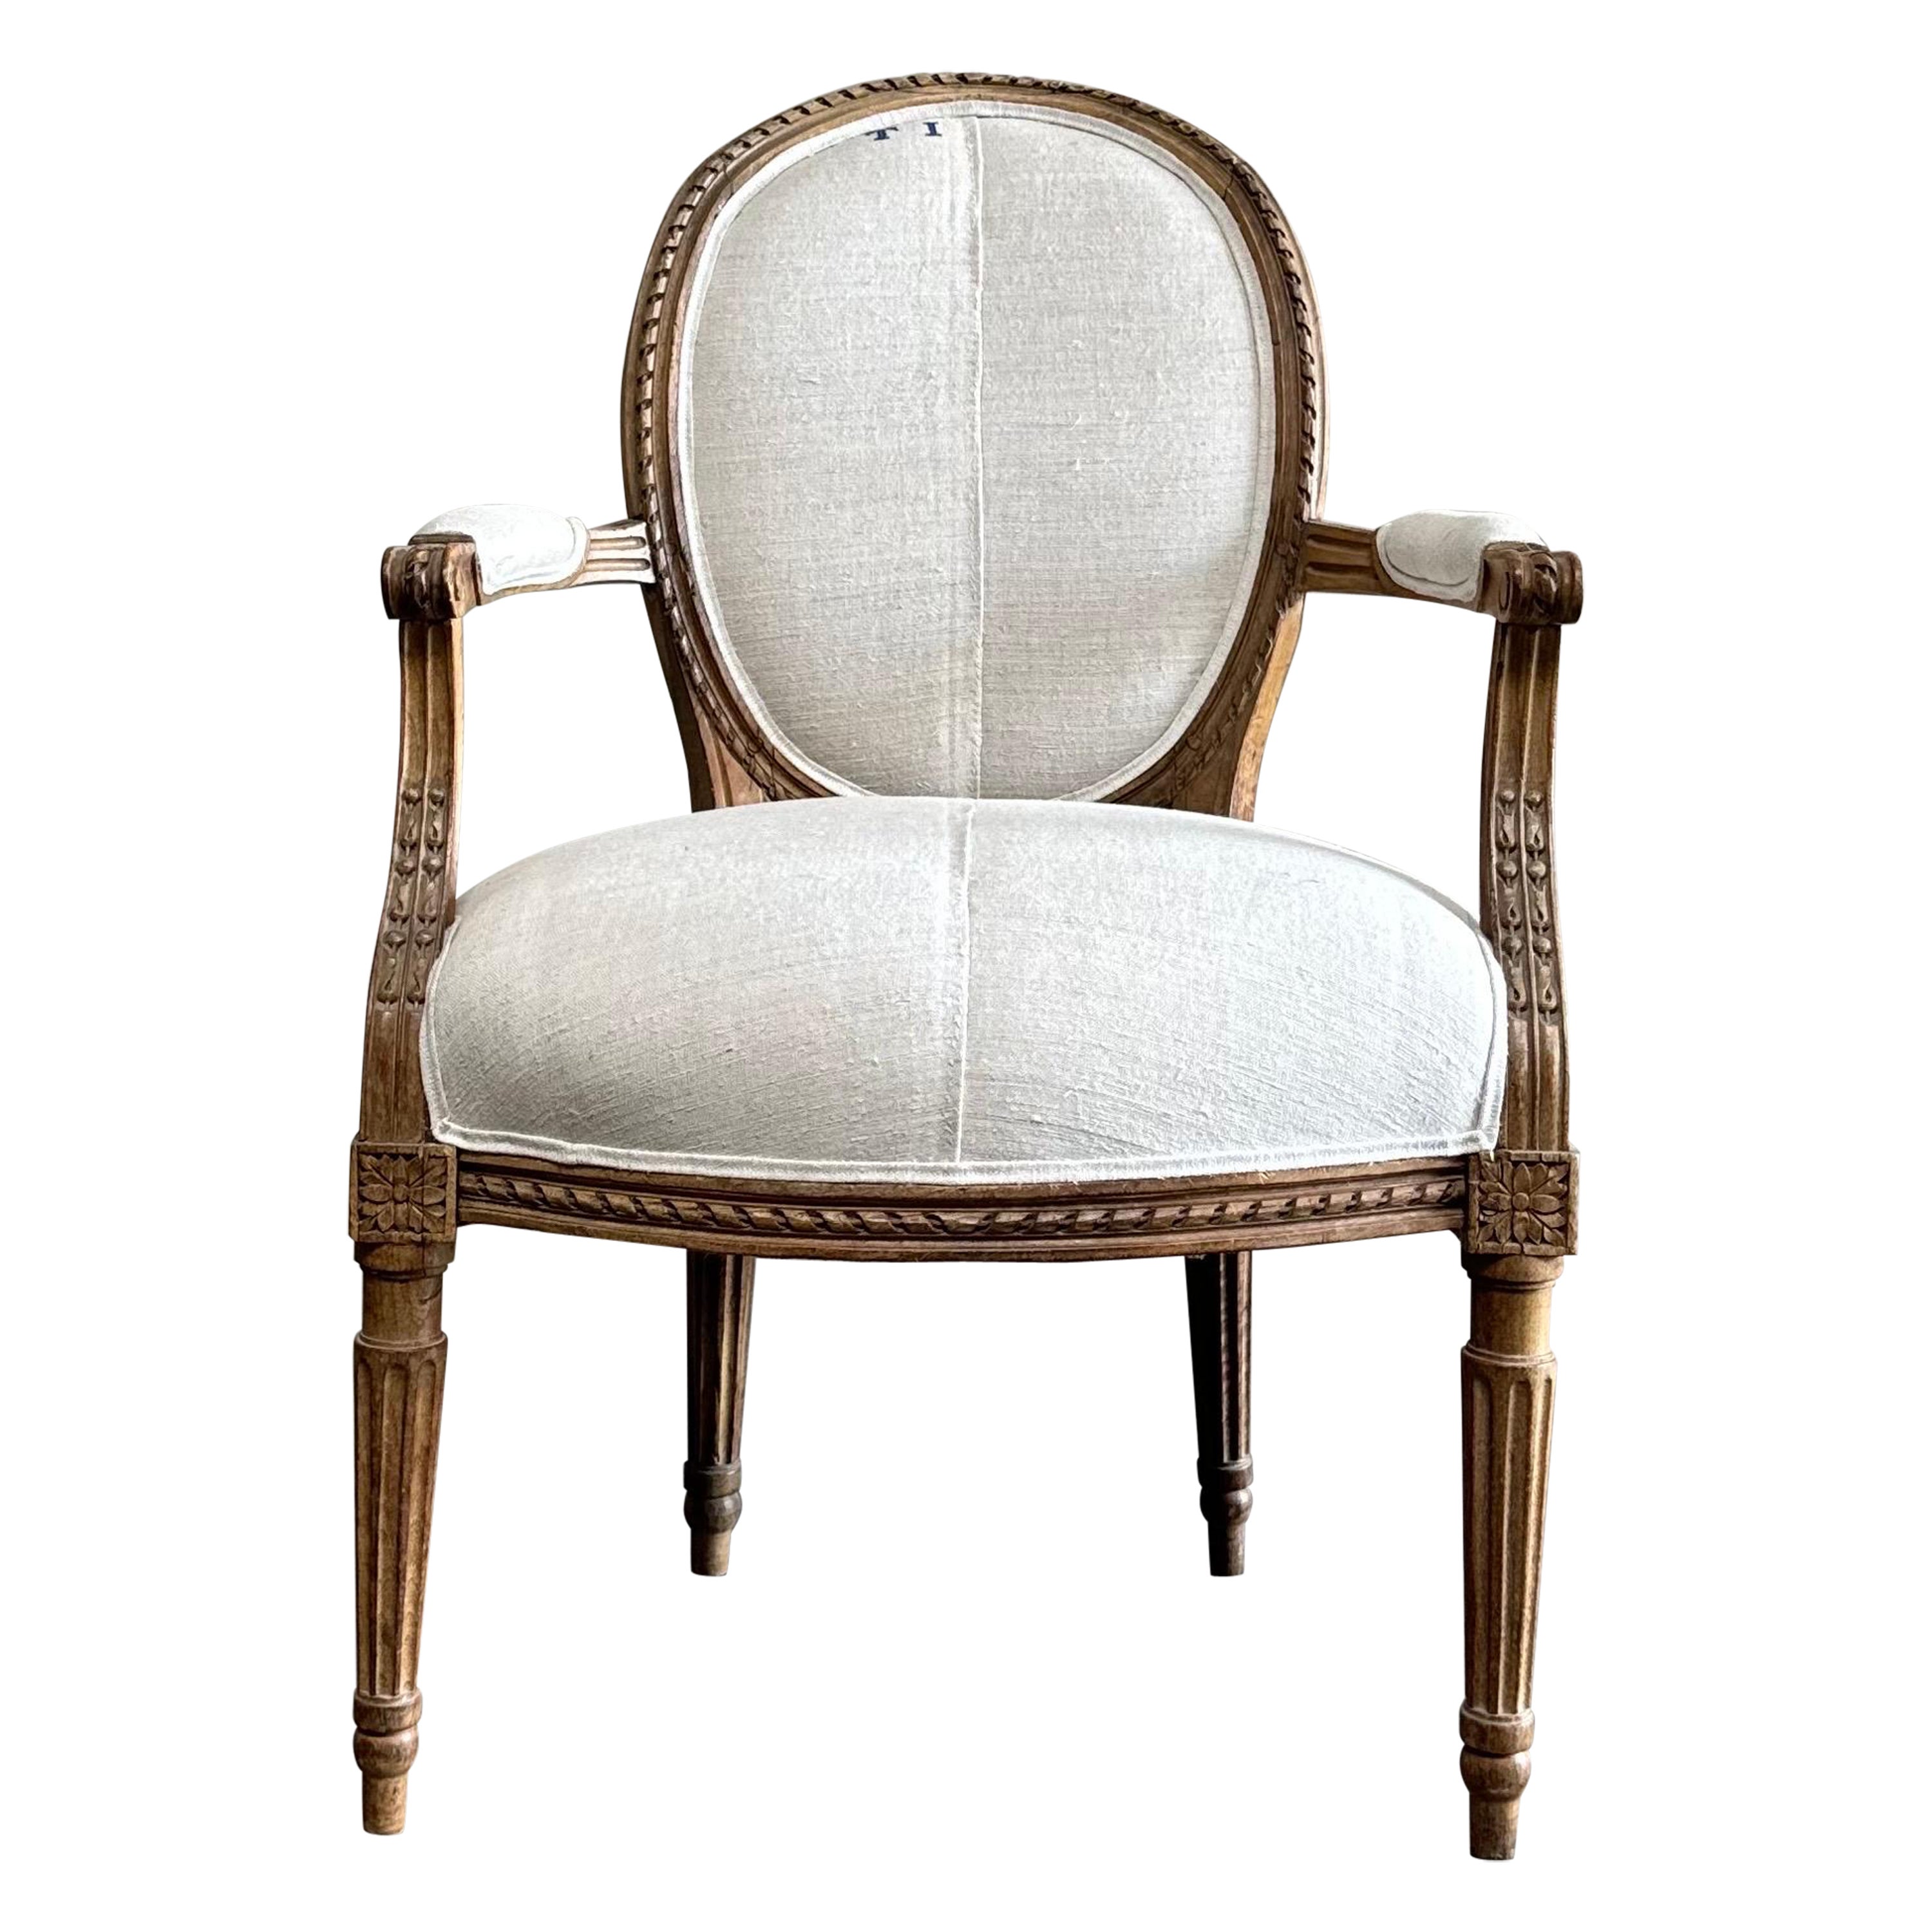 Antique Louis XVI French Open Arm chair